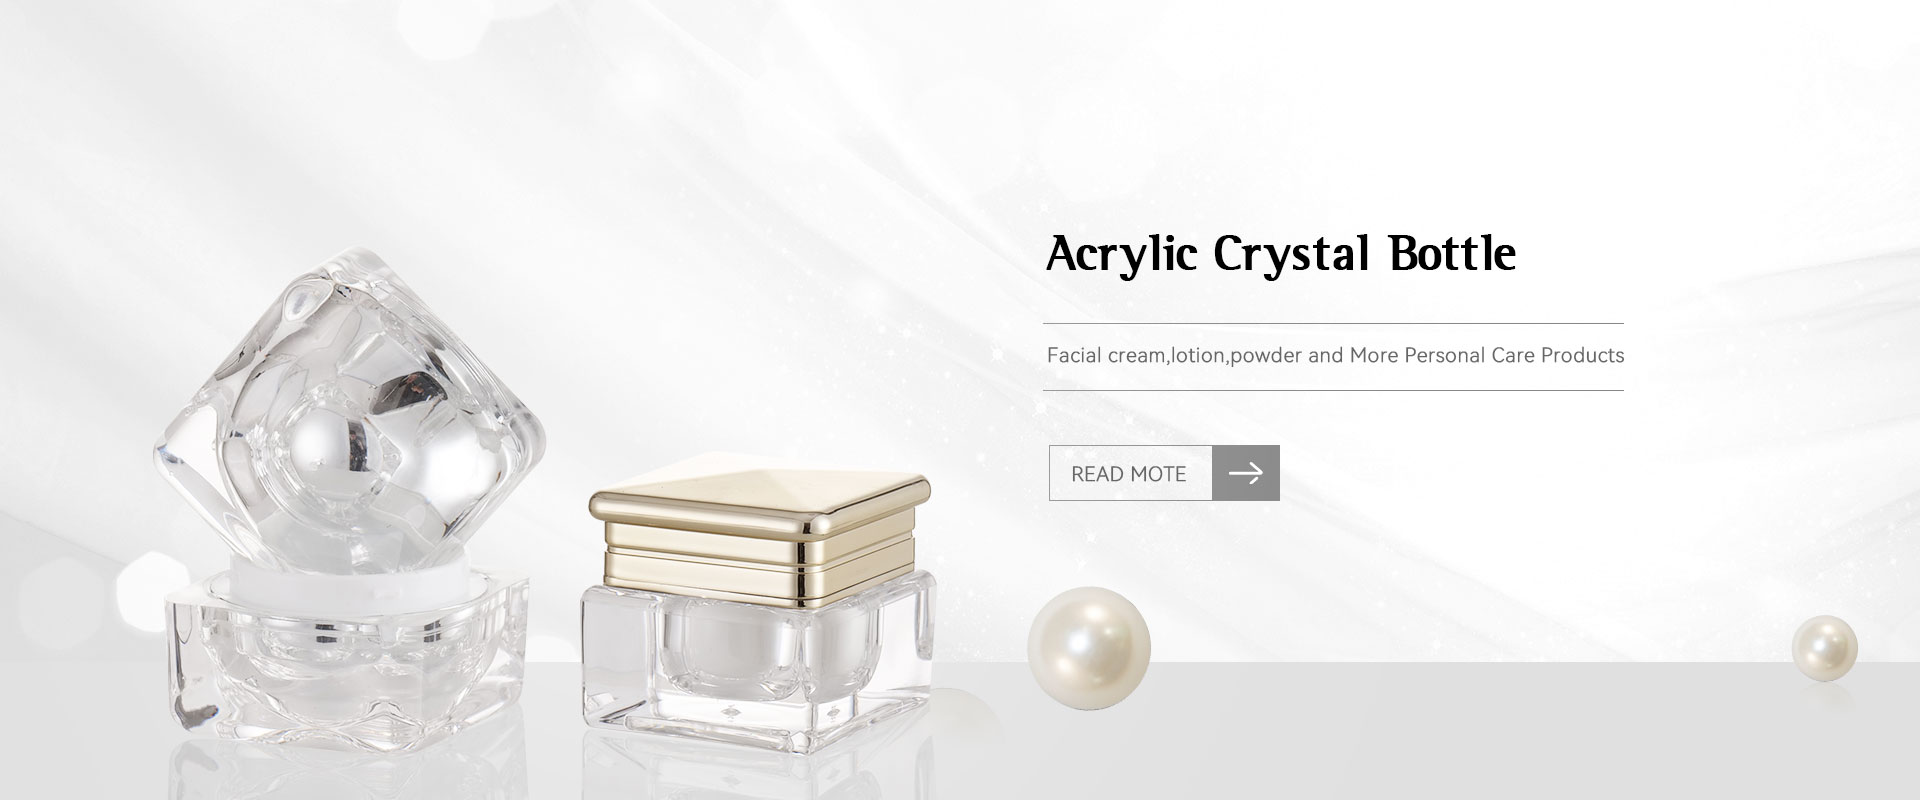 Fabrikant van acrylkristalflessen